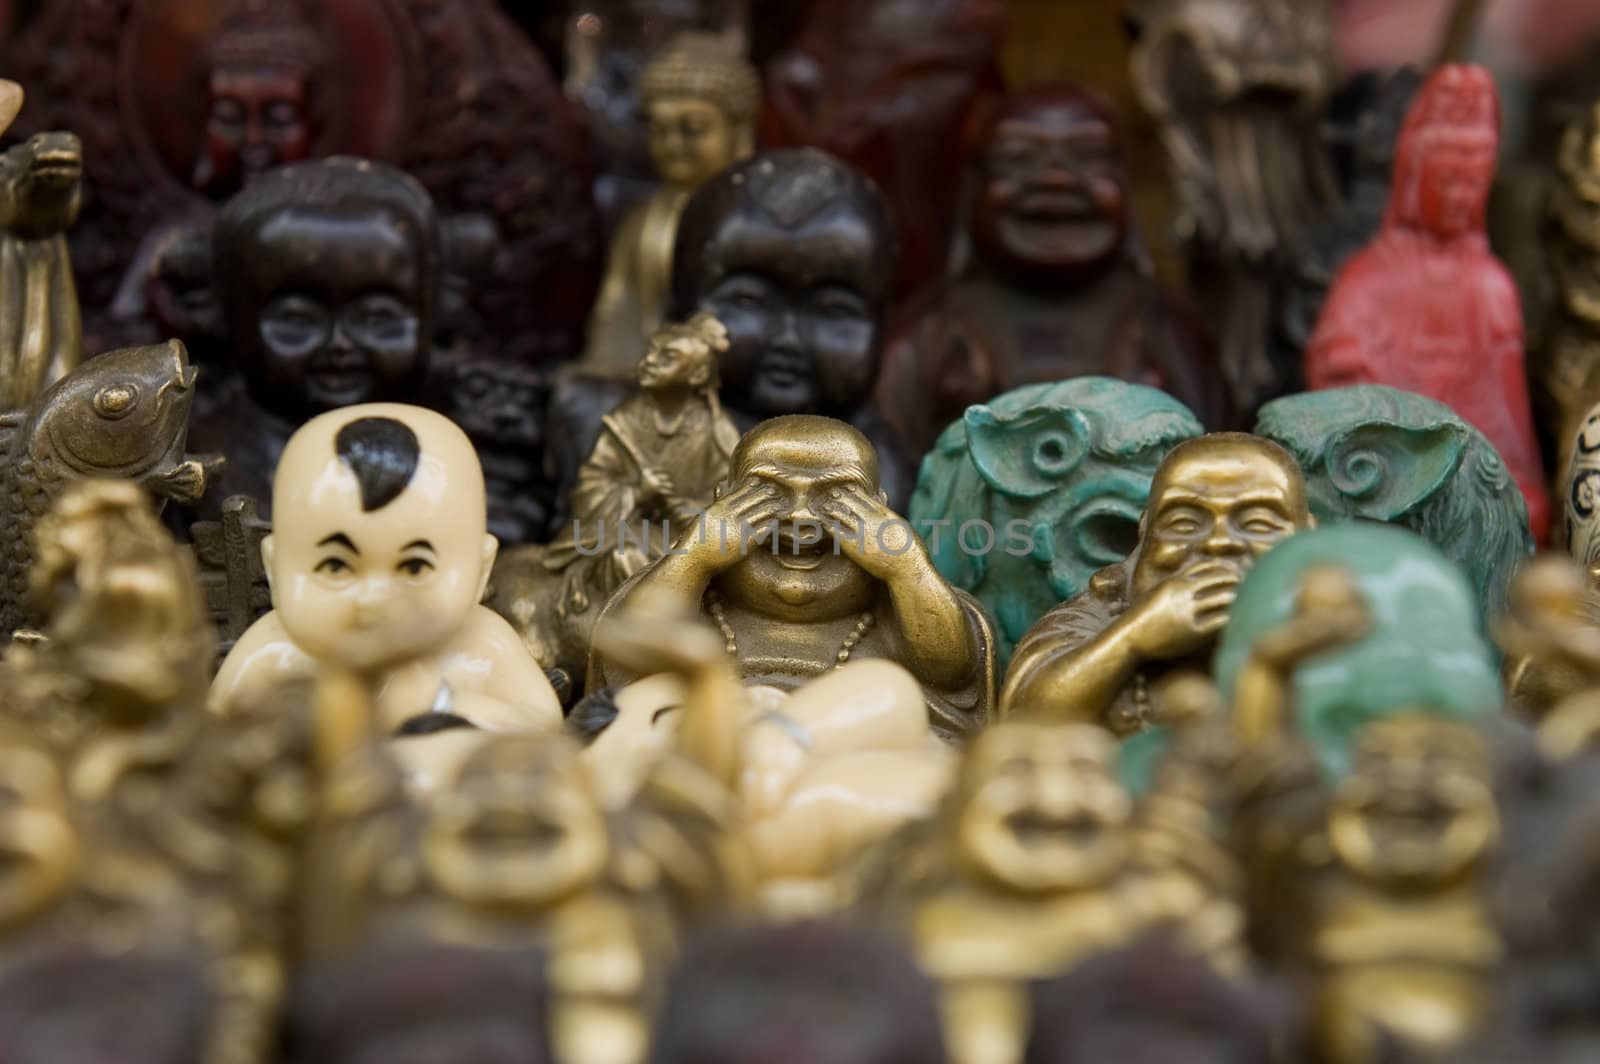 Flea Market buddha statues